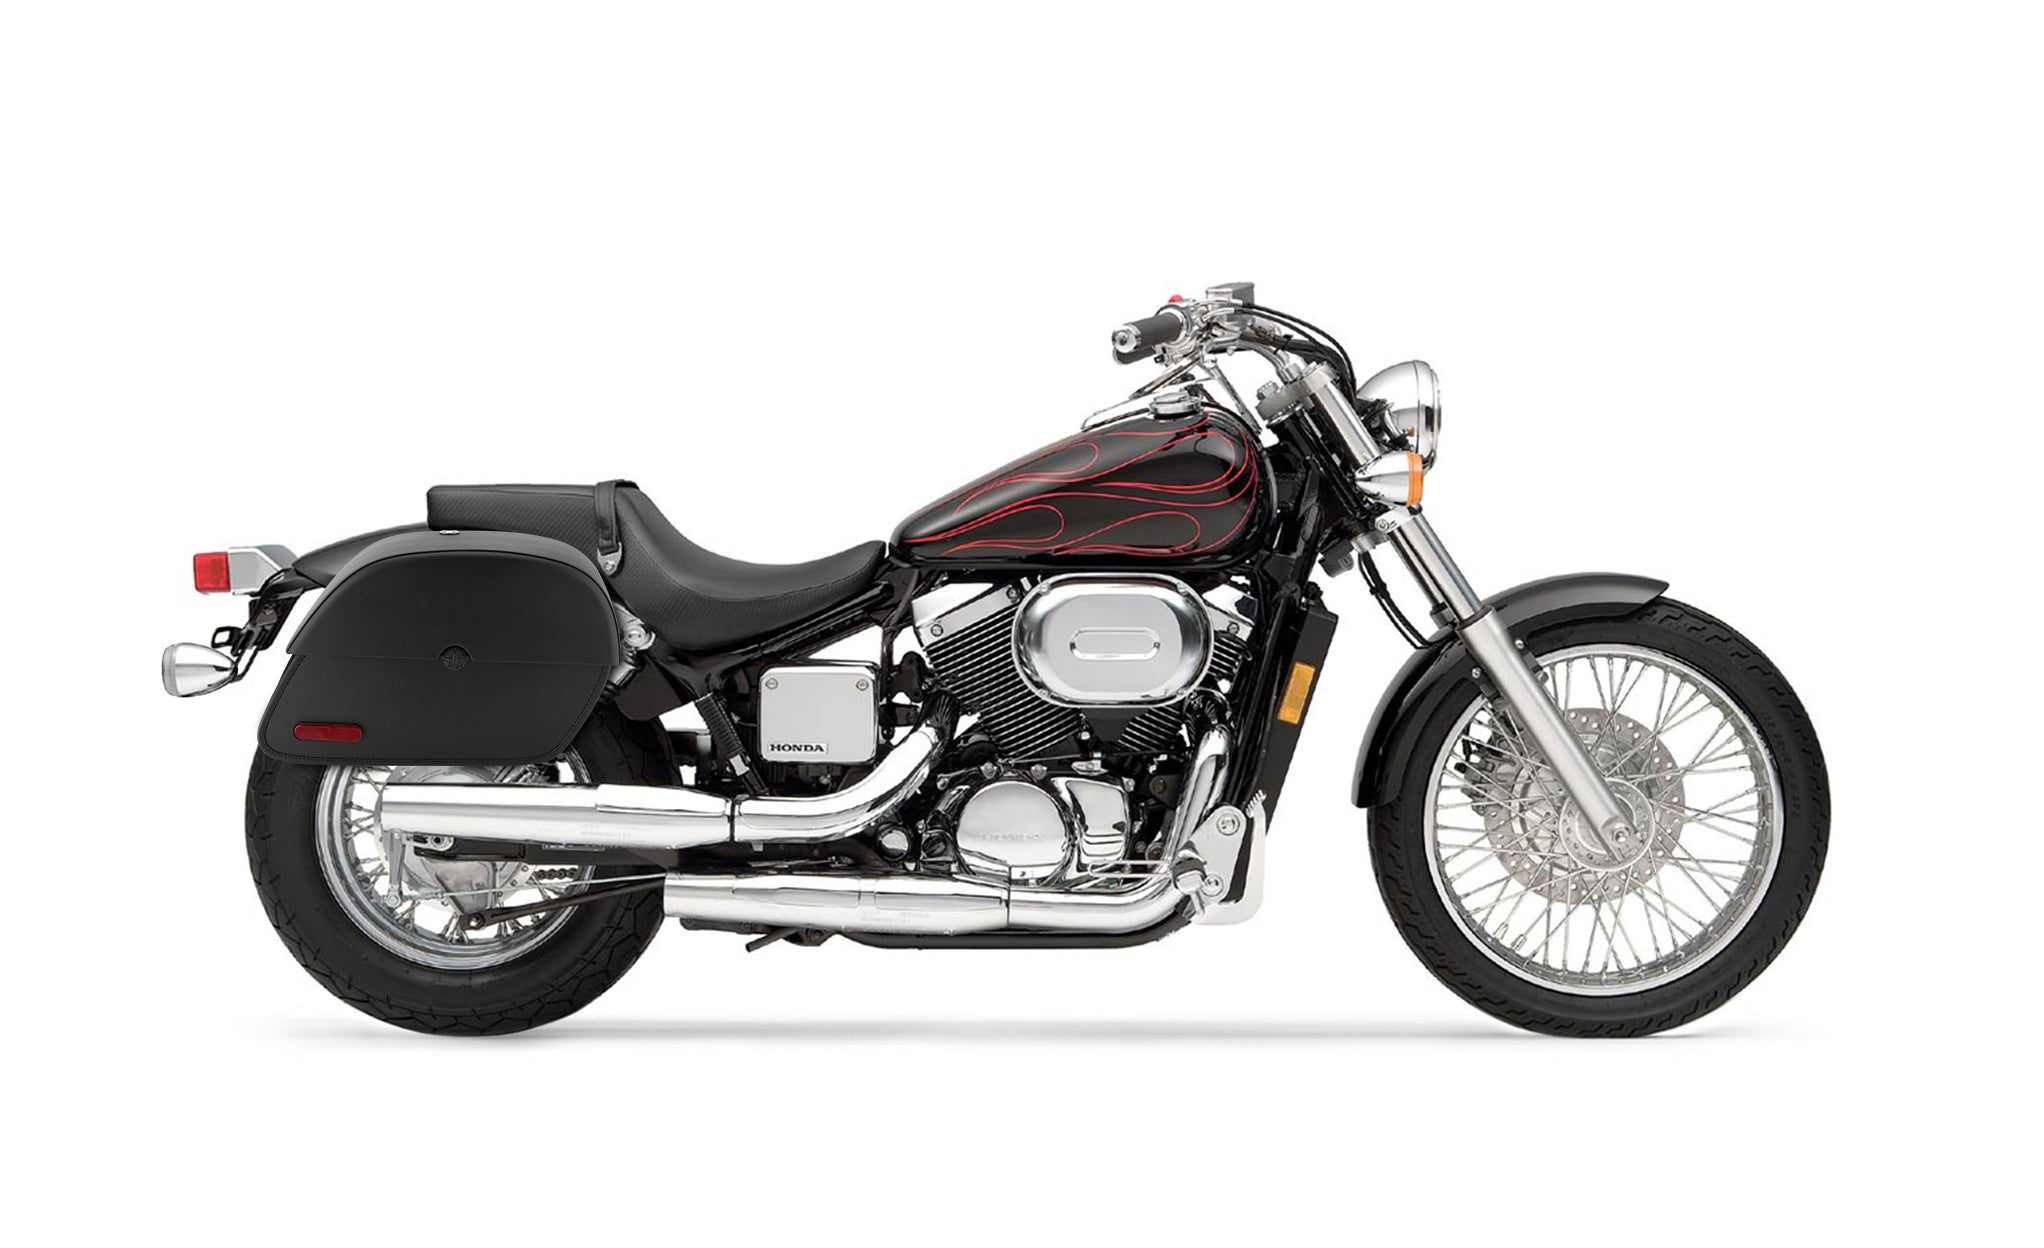 Viking Panzer Medium Honda Shadow 750 Spirit Dc Leather Motorcycle Saddlebags Engineering Excellence with Bag on Bike @expand